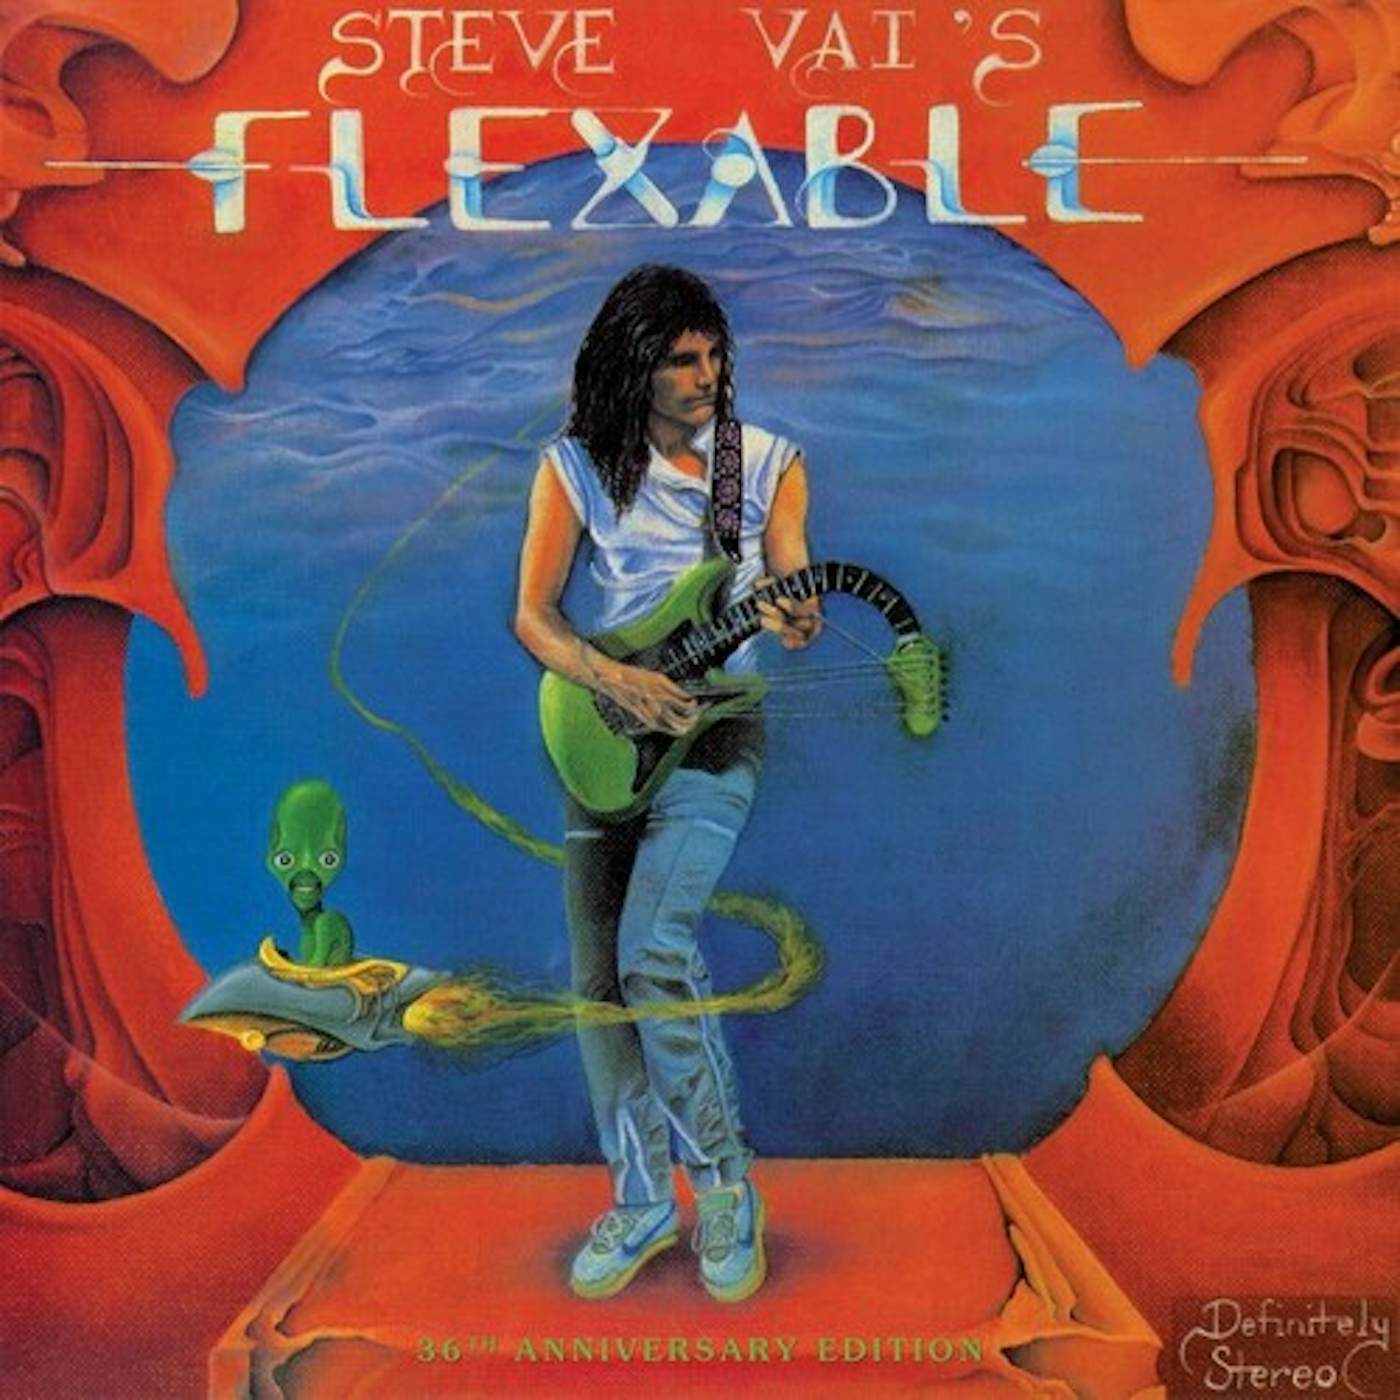 Steve Vai FLEX-ABLE (36TH ANNIVERSARY) CD